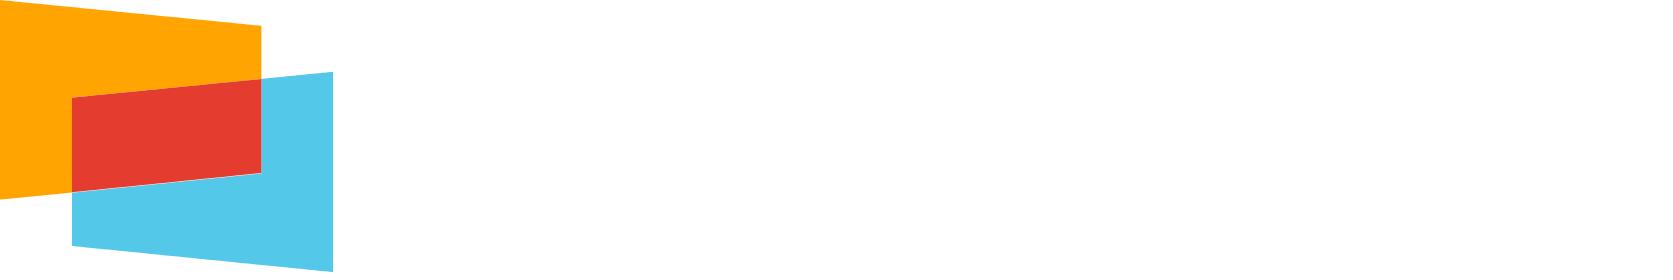 Comscore
 logo large for dark backgrounds (transparent PNG)